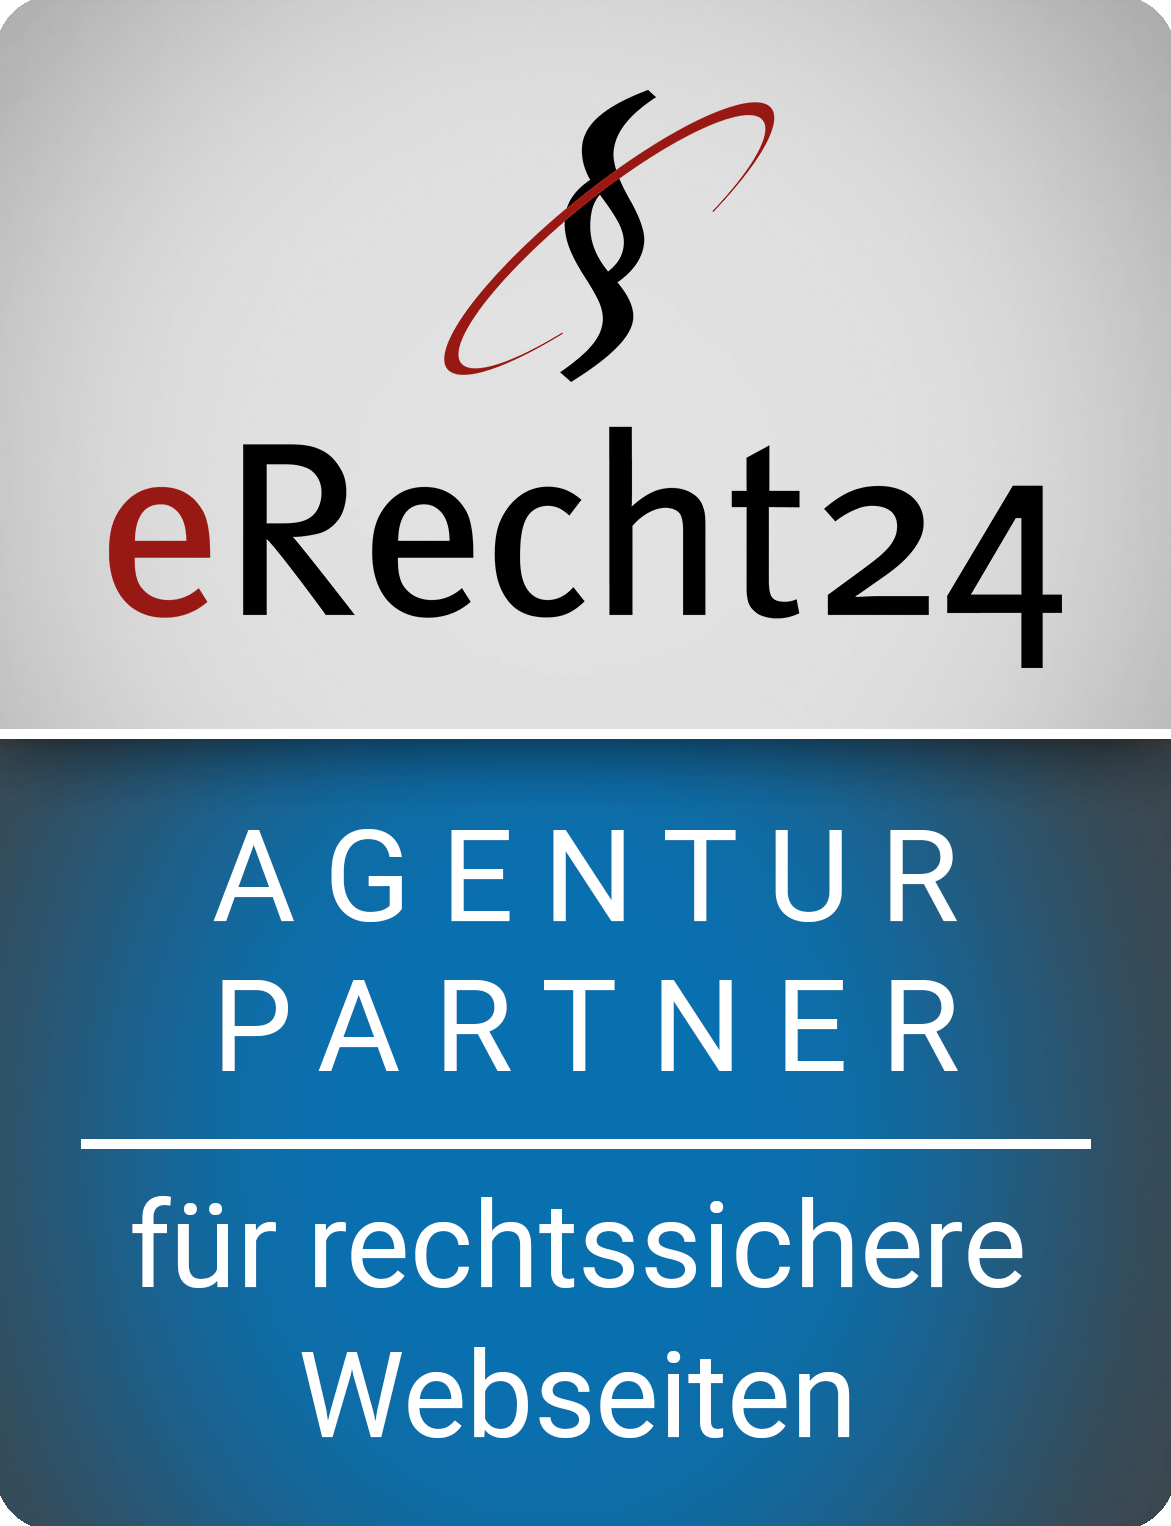 erecht24-siegel-agenturpartner